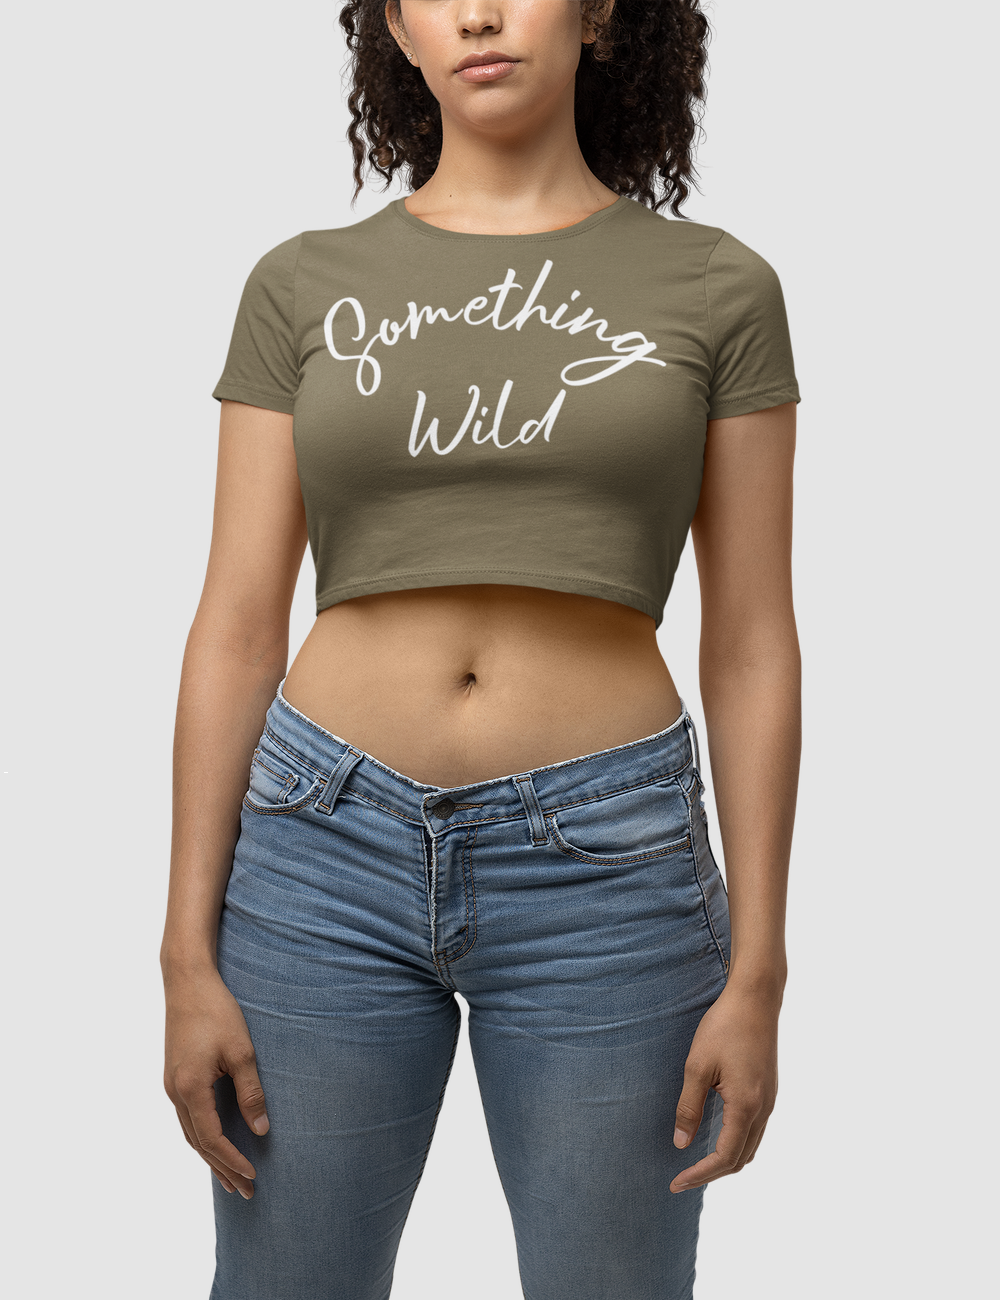 Something Wild Women's Fitted Crop Top T-Shirt OniTakai